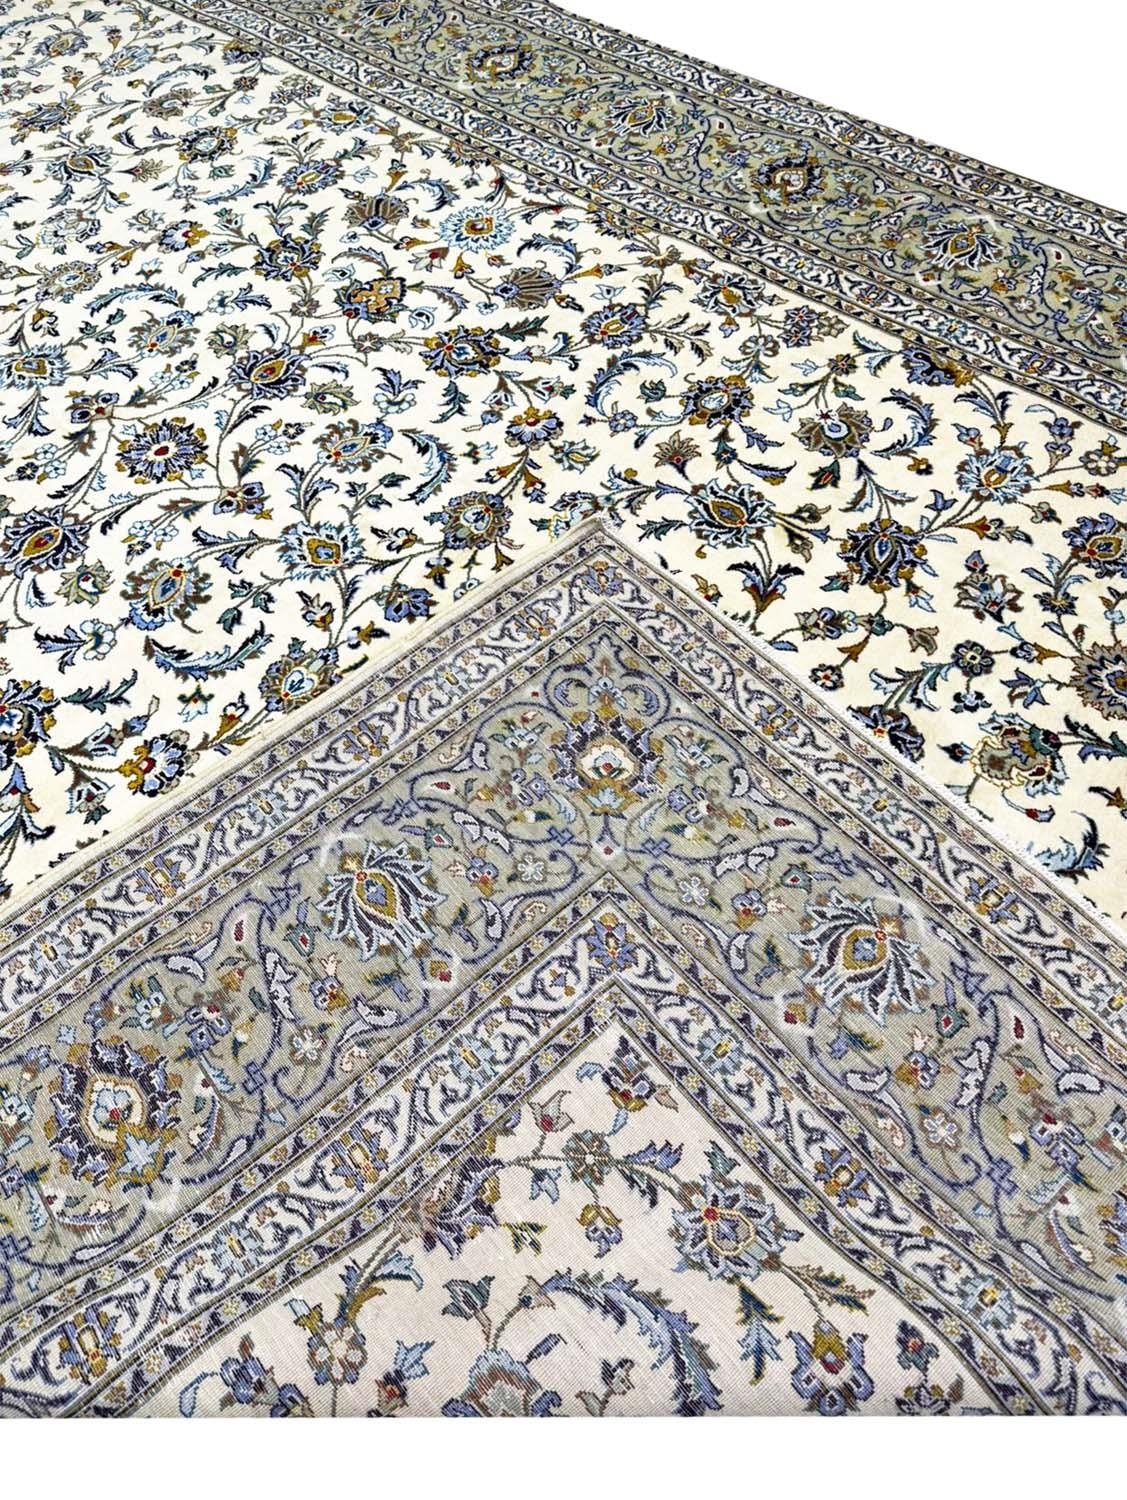 FINE PERSIAN ISFAHAN DESIGN CARPET, 380cm x 290cm. - Image 5 of 5